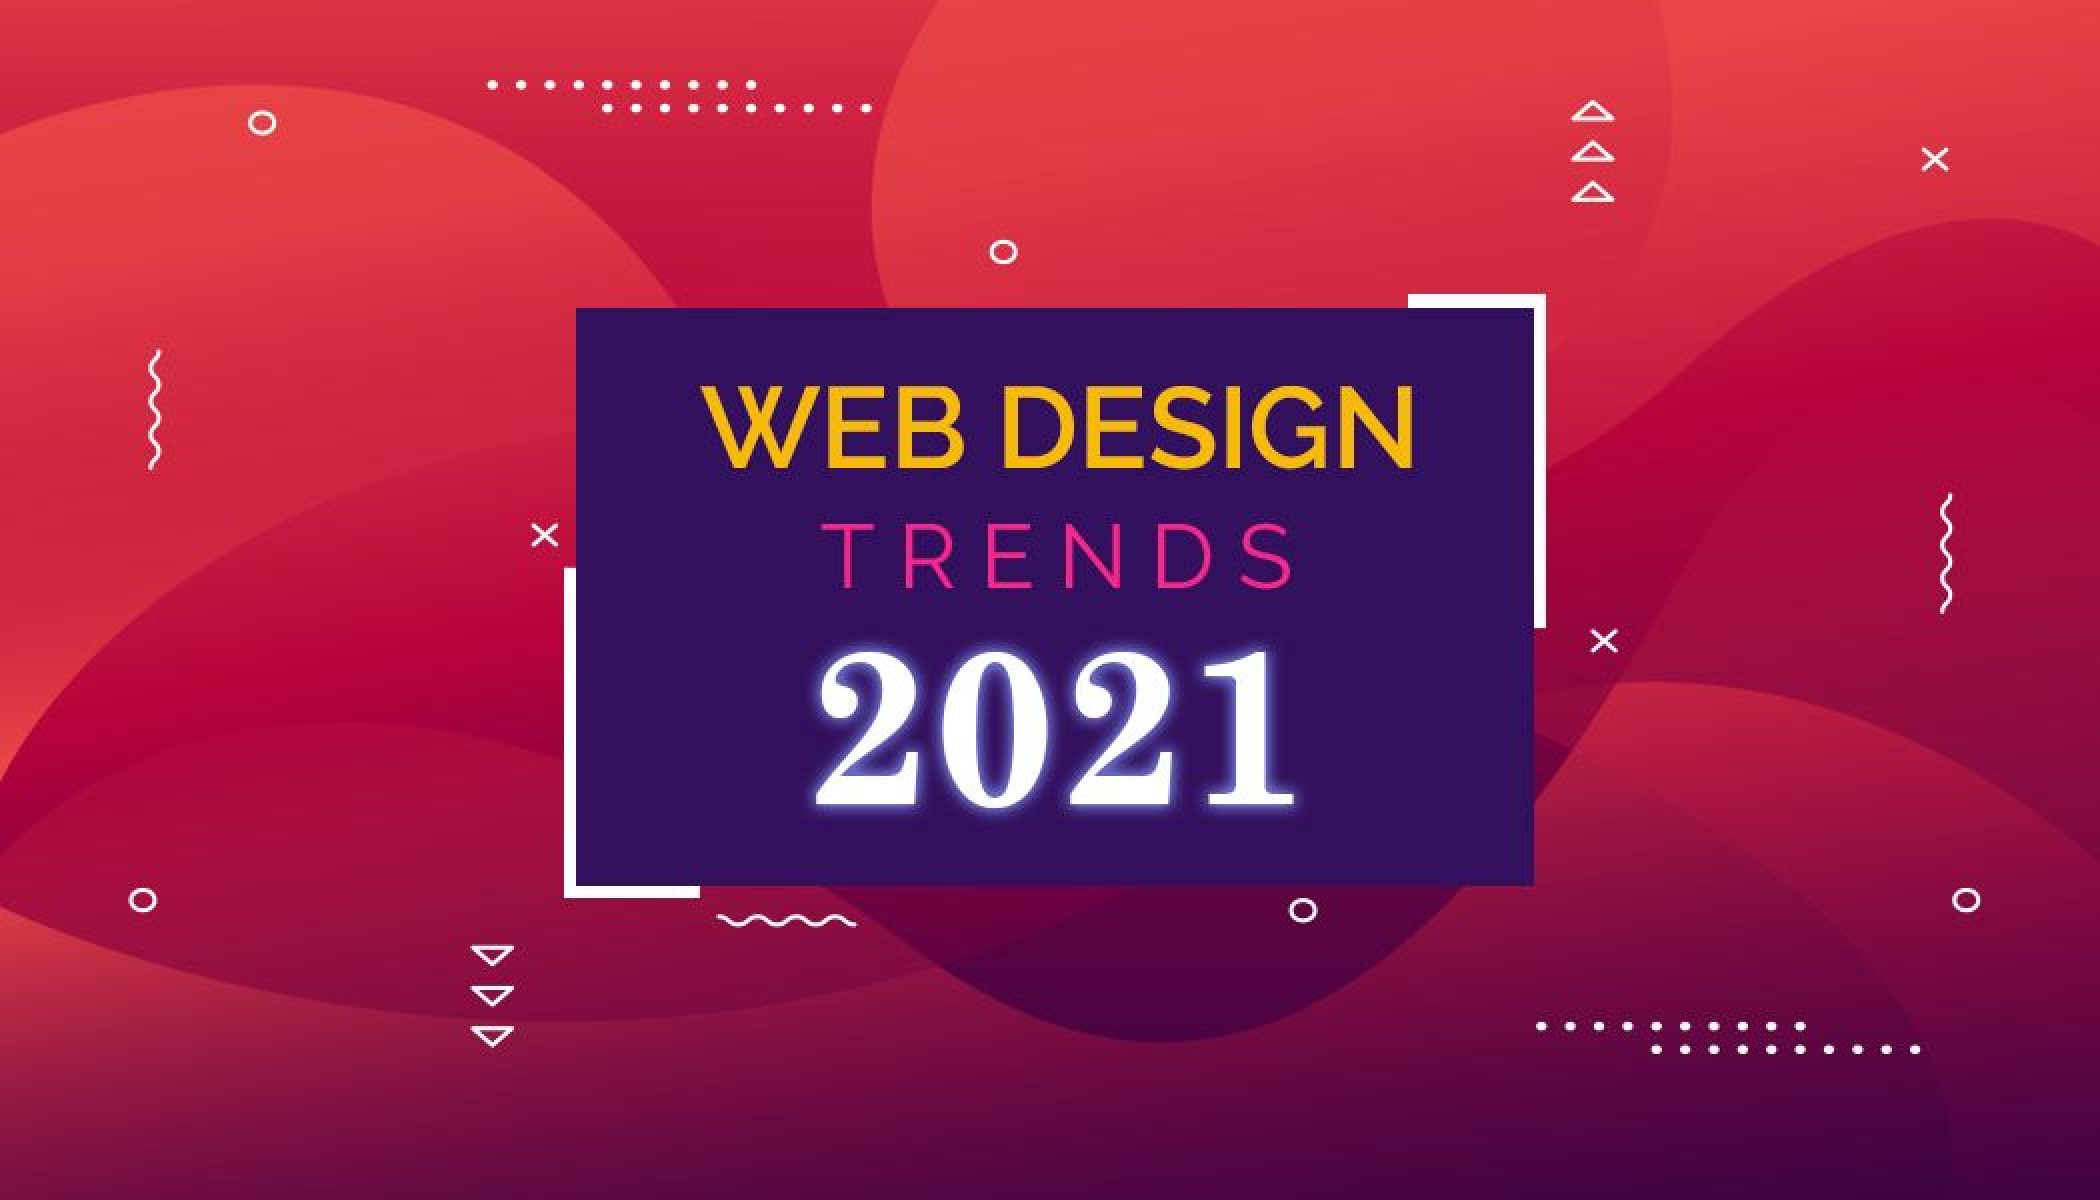 Web Design Trends 